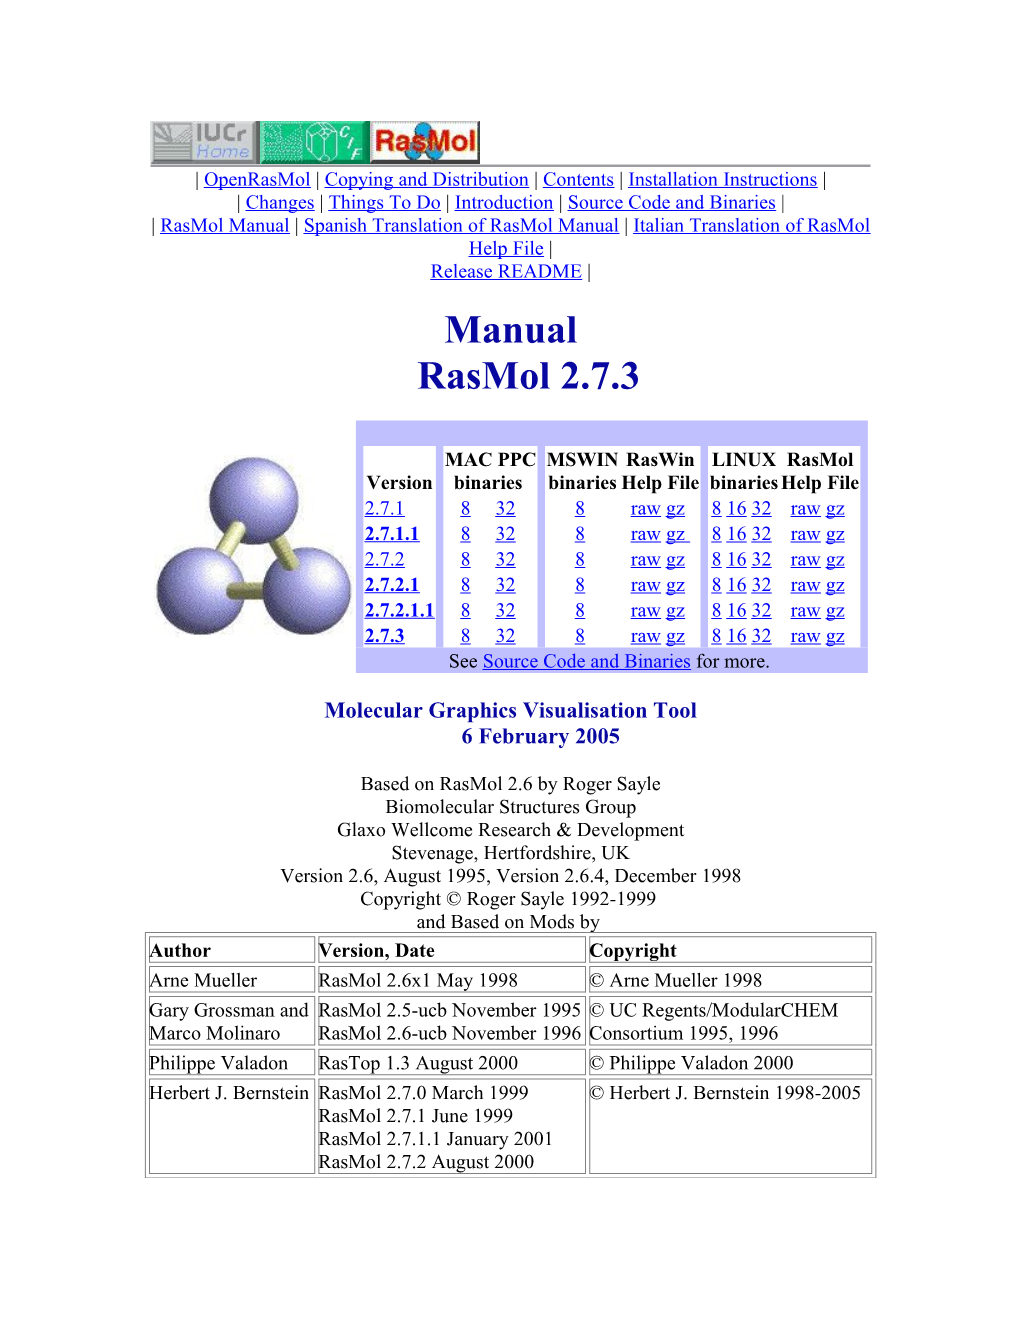 Molecular Graphics Visualisation Tool6 February 2005